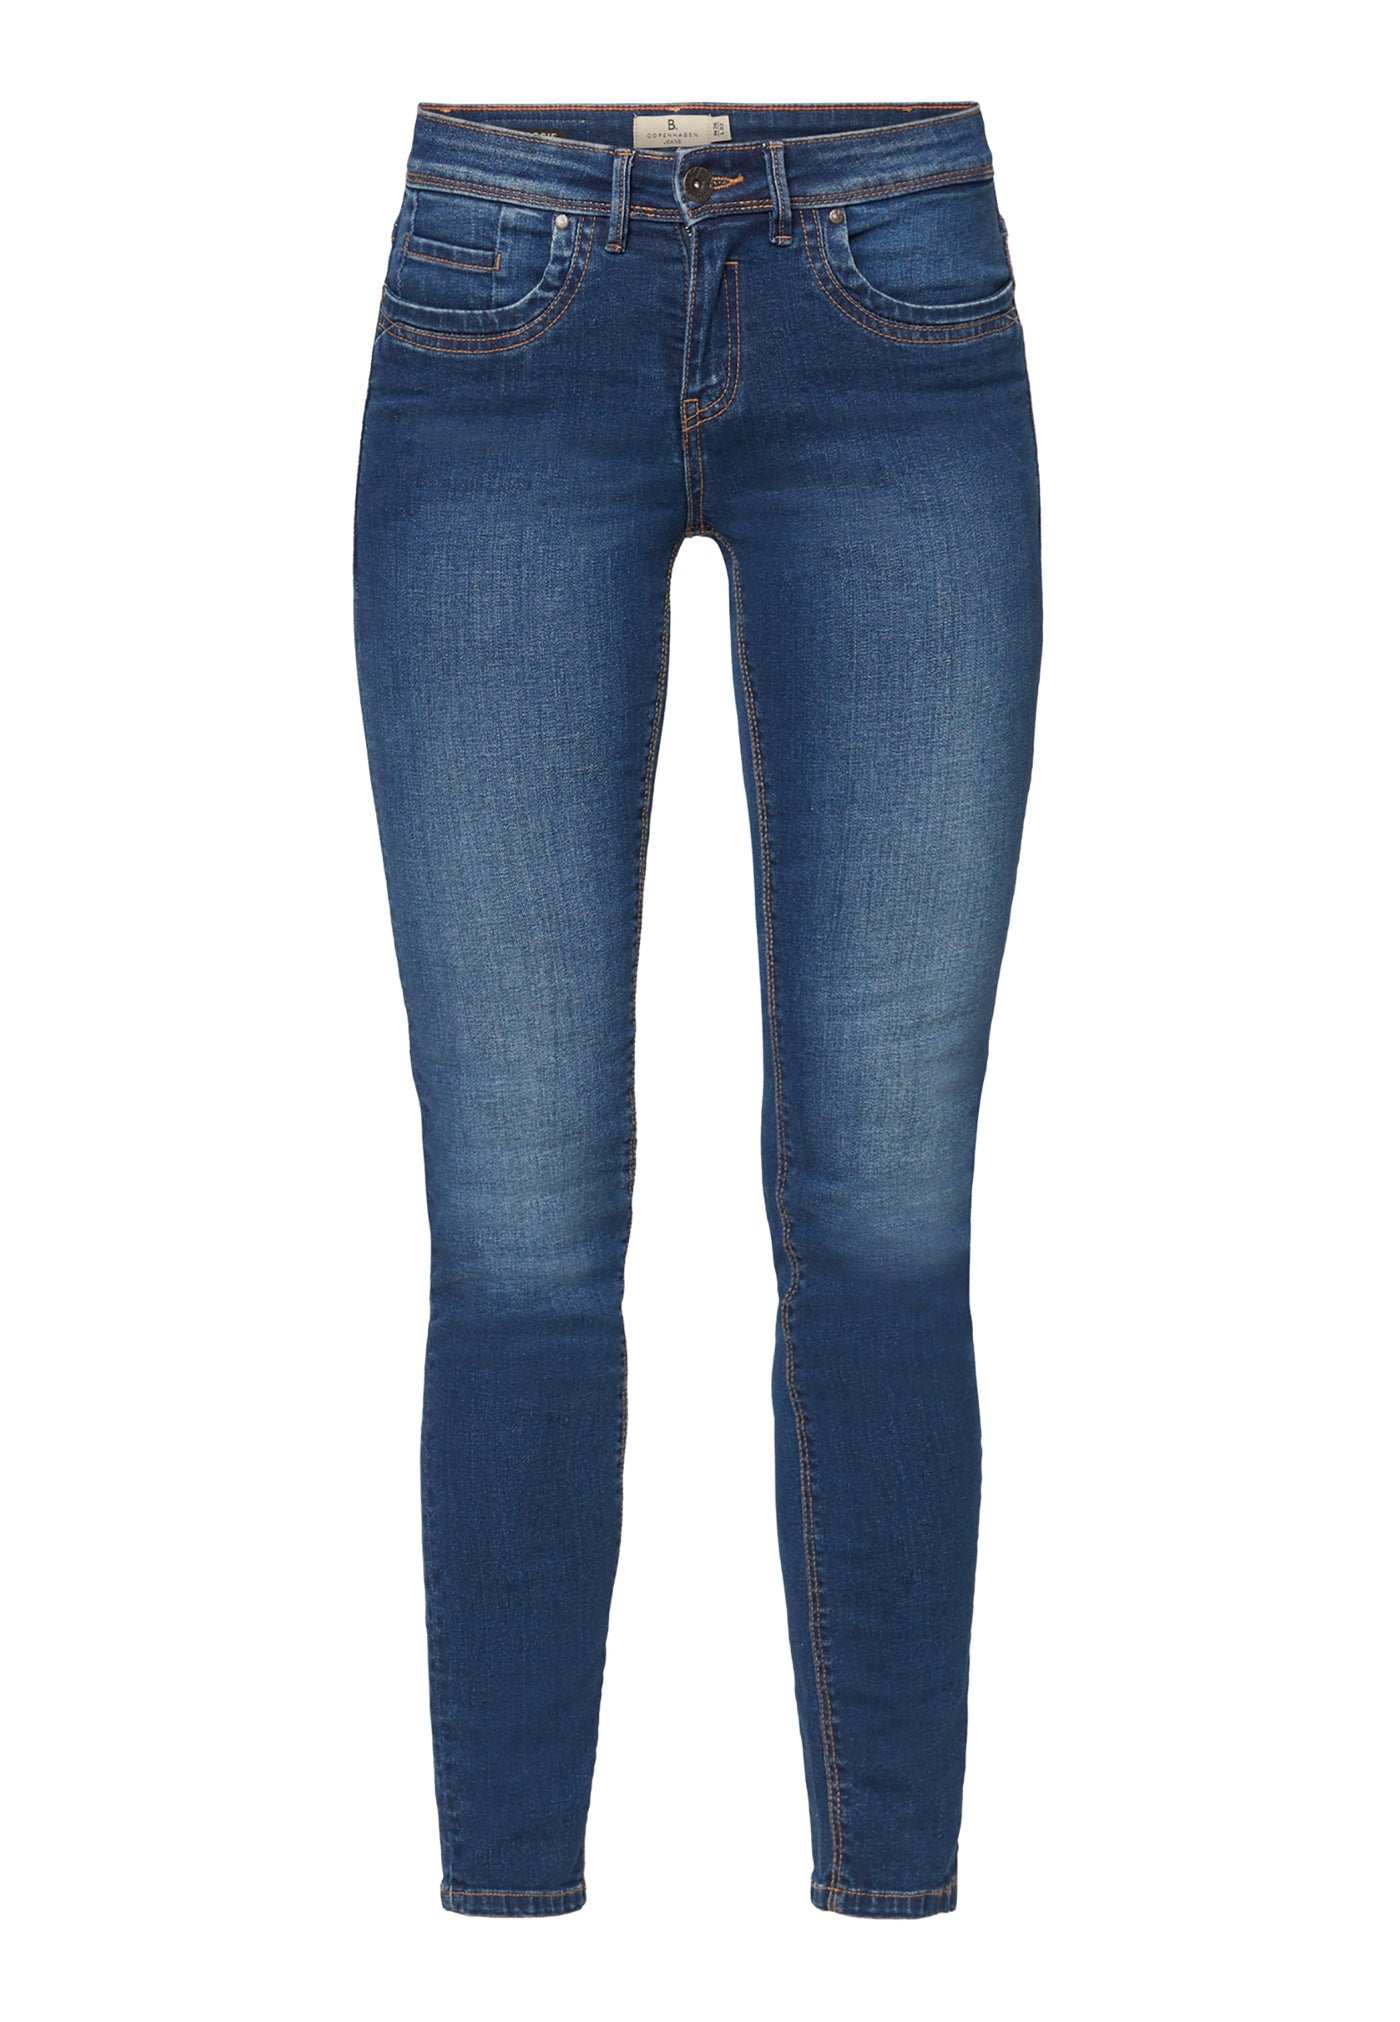 Jeans Maggie Narrow Legs - Dark Blue